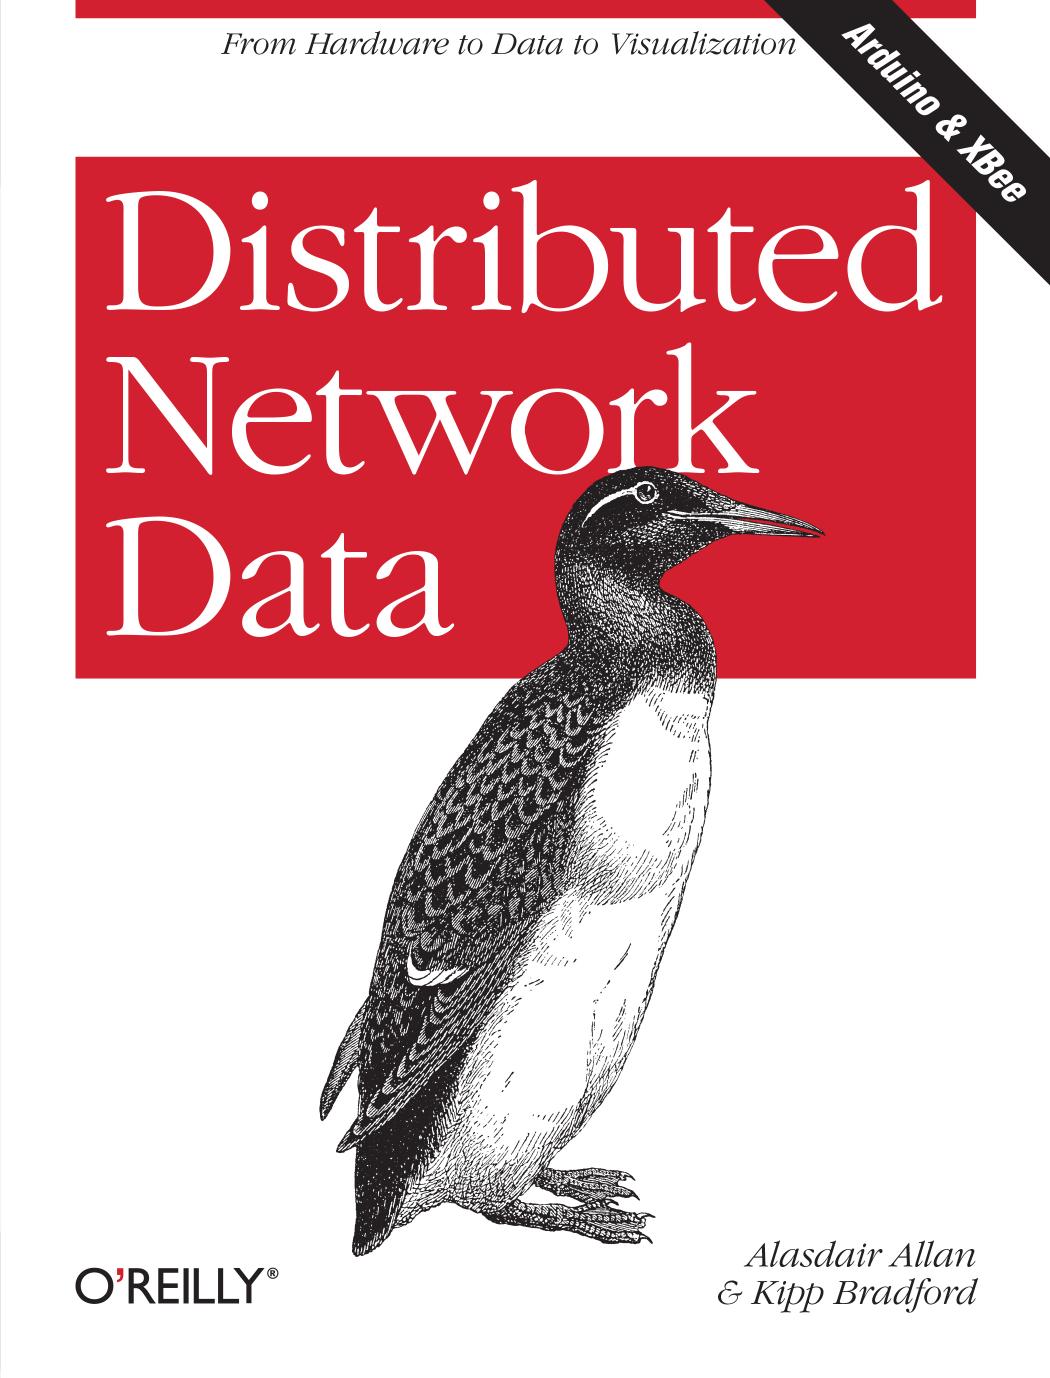 Distributed Network Data by Alasdair Allan and Kipp Bradford